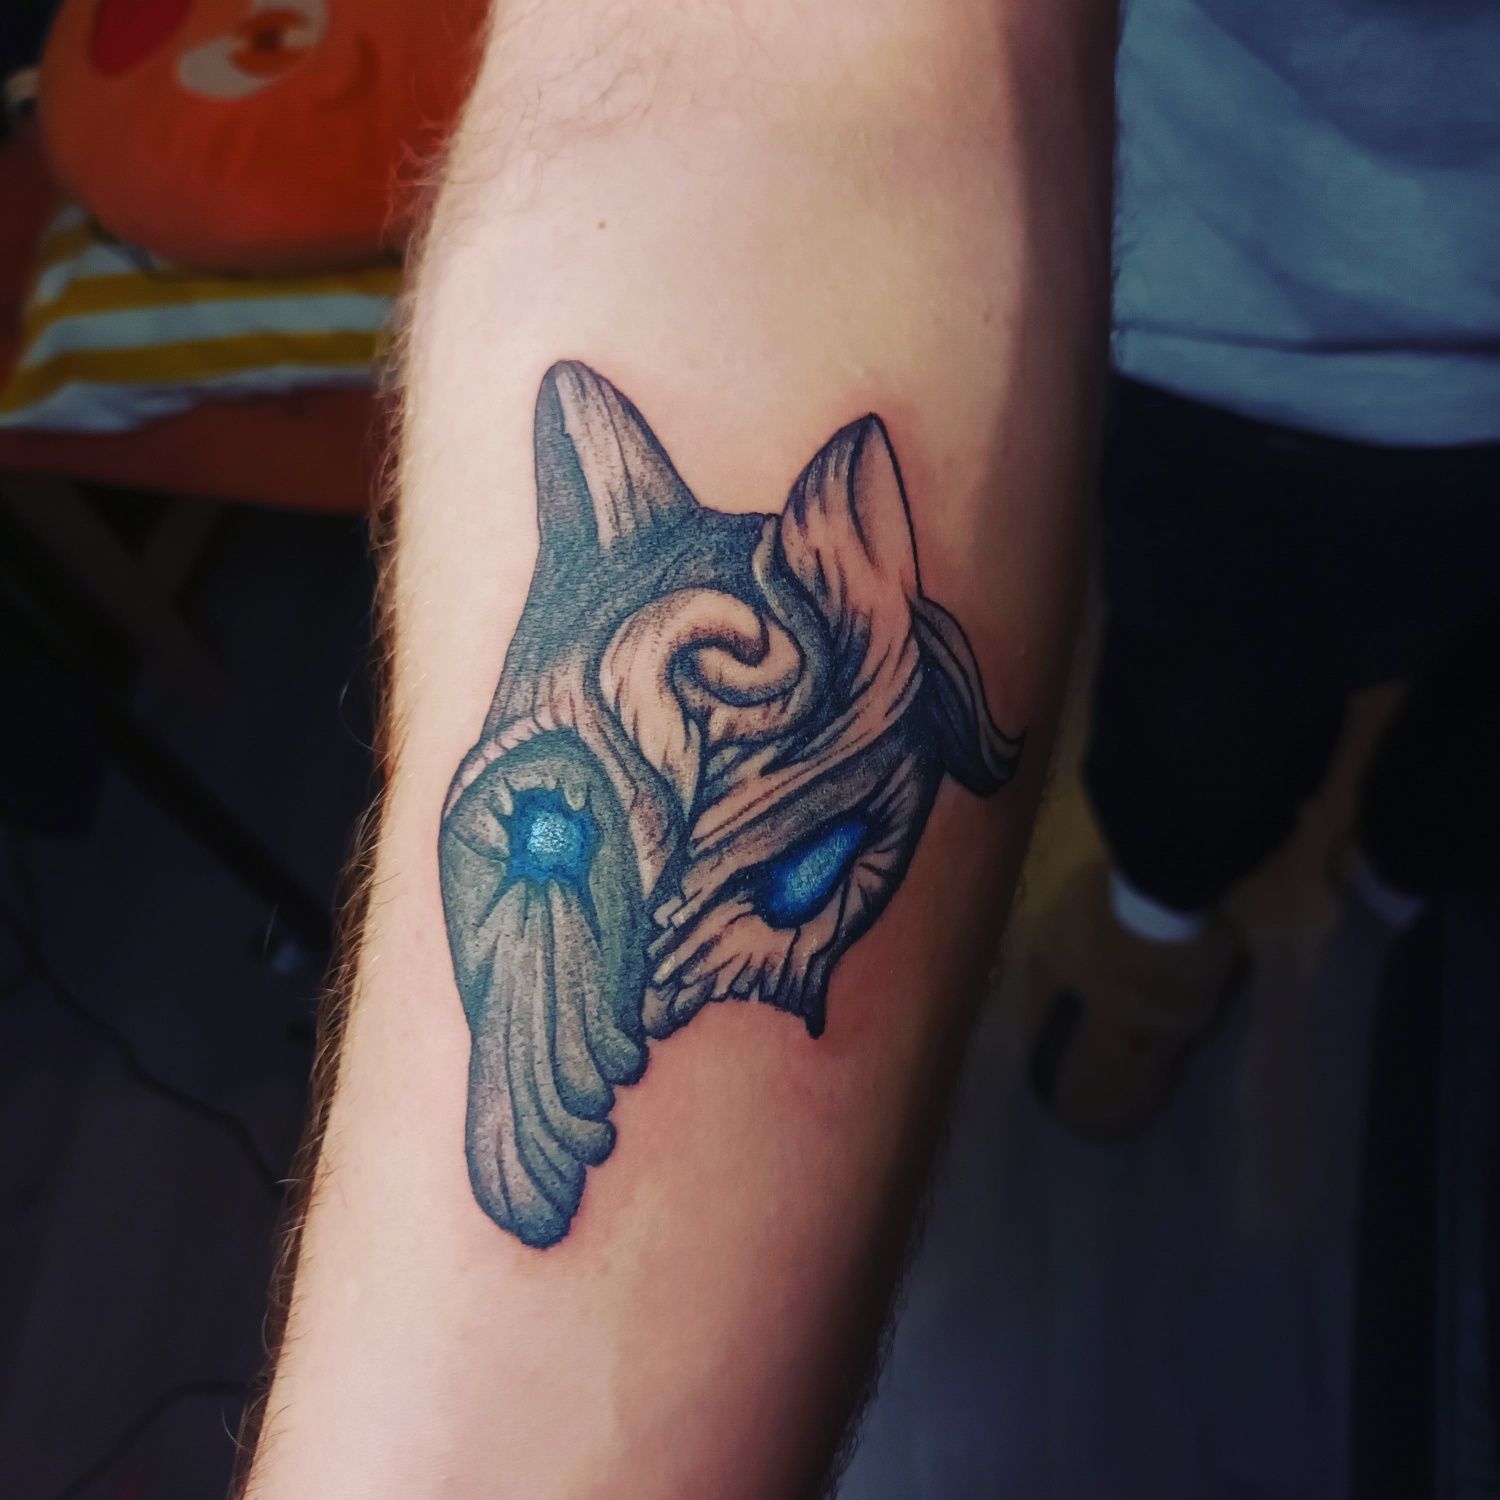 Tatuaje permanente, tattoo